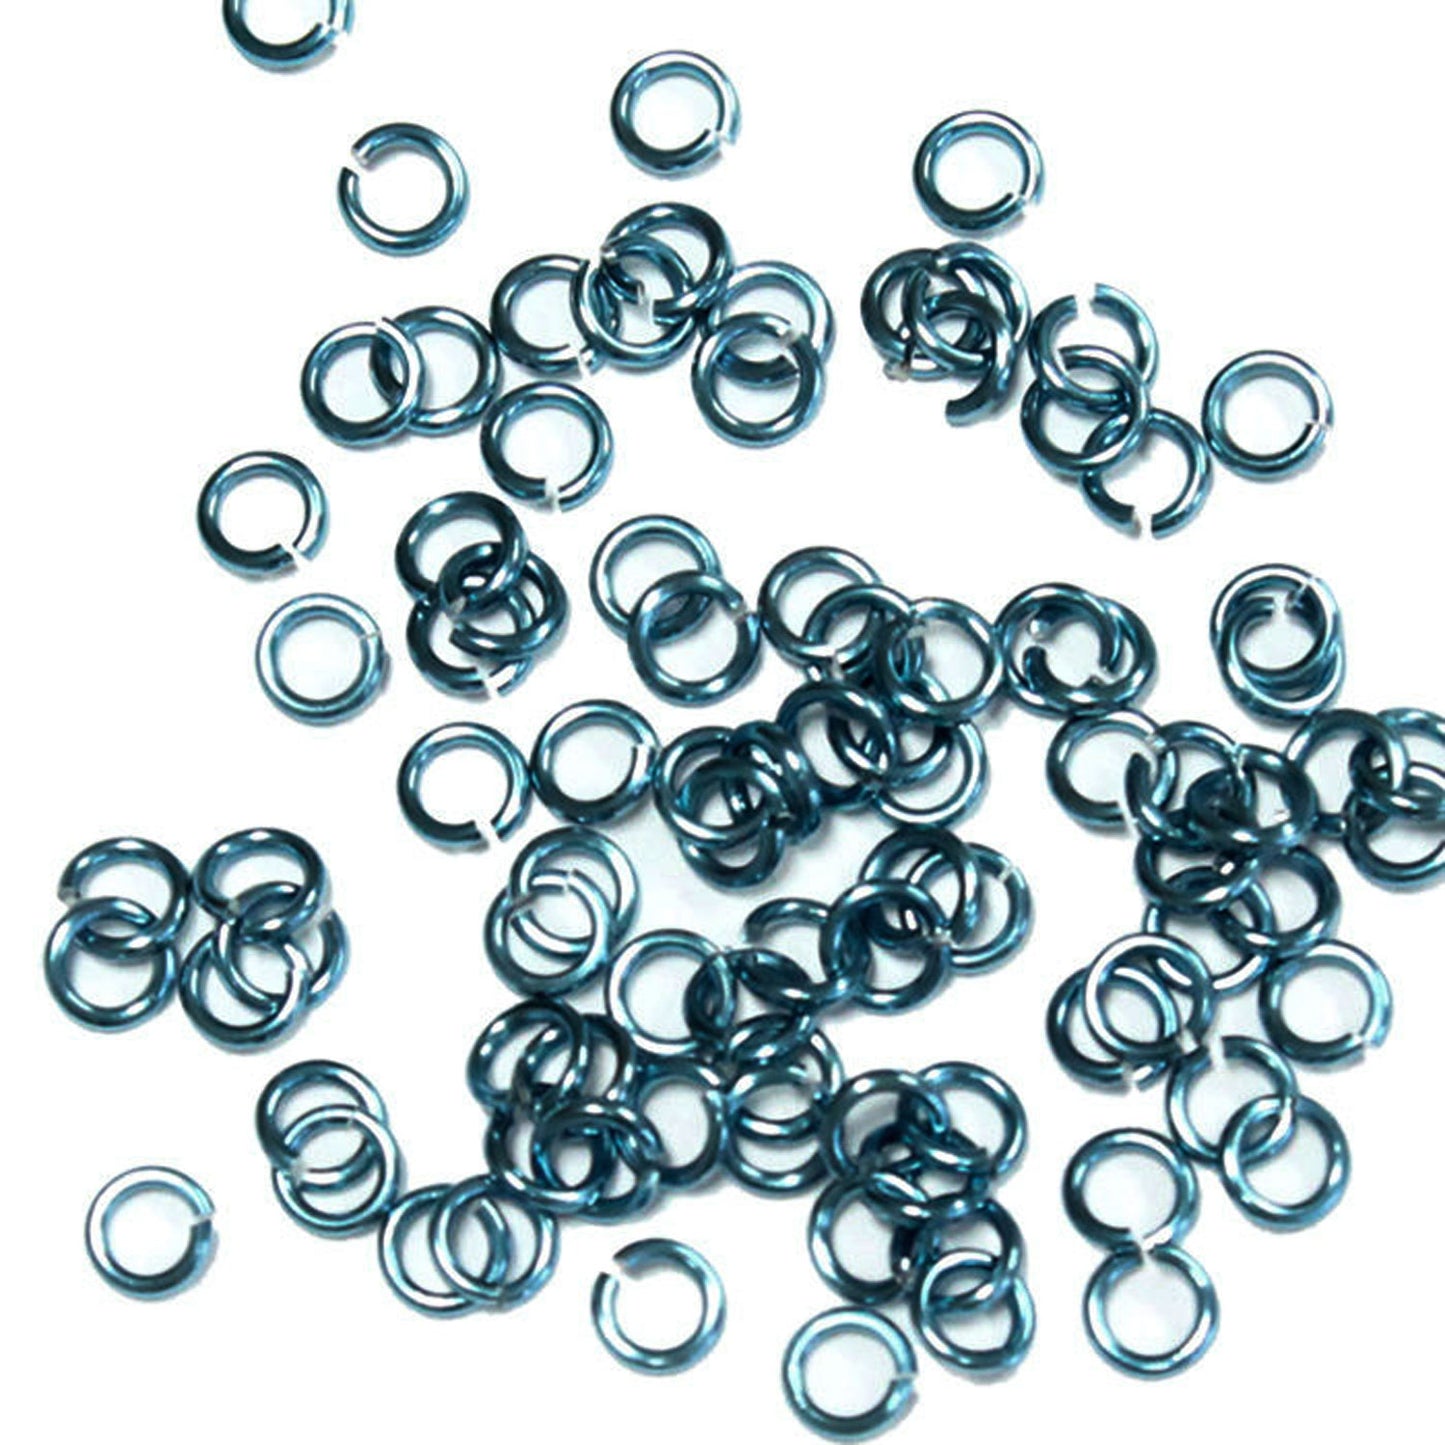 SHINY DARK SKY BLUE / 2.4mm 20 GA Jump Rings / 5 Gram Pack (approx 350) / sawcut round open anodized aluminum